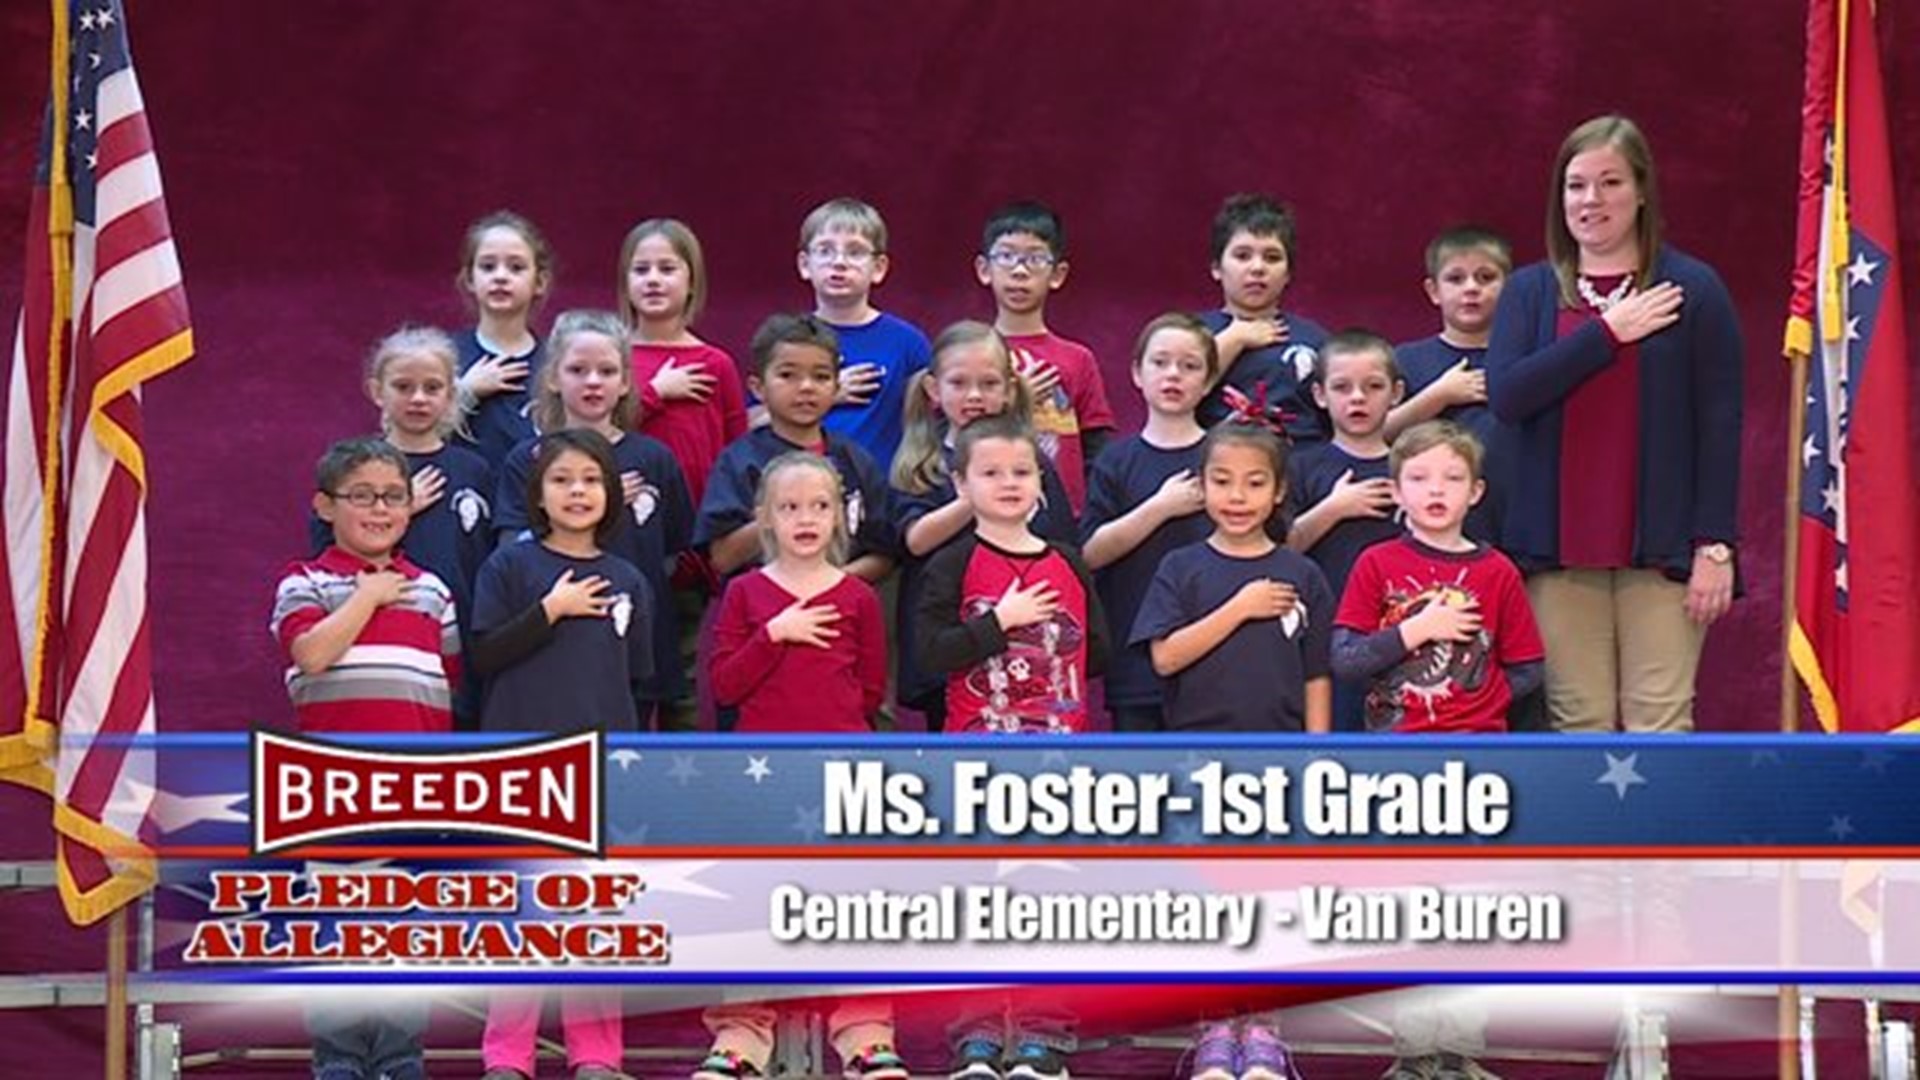 Central Elementary - Van Buren, Ms. Foster - First Grade